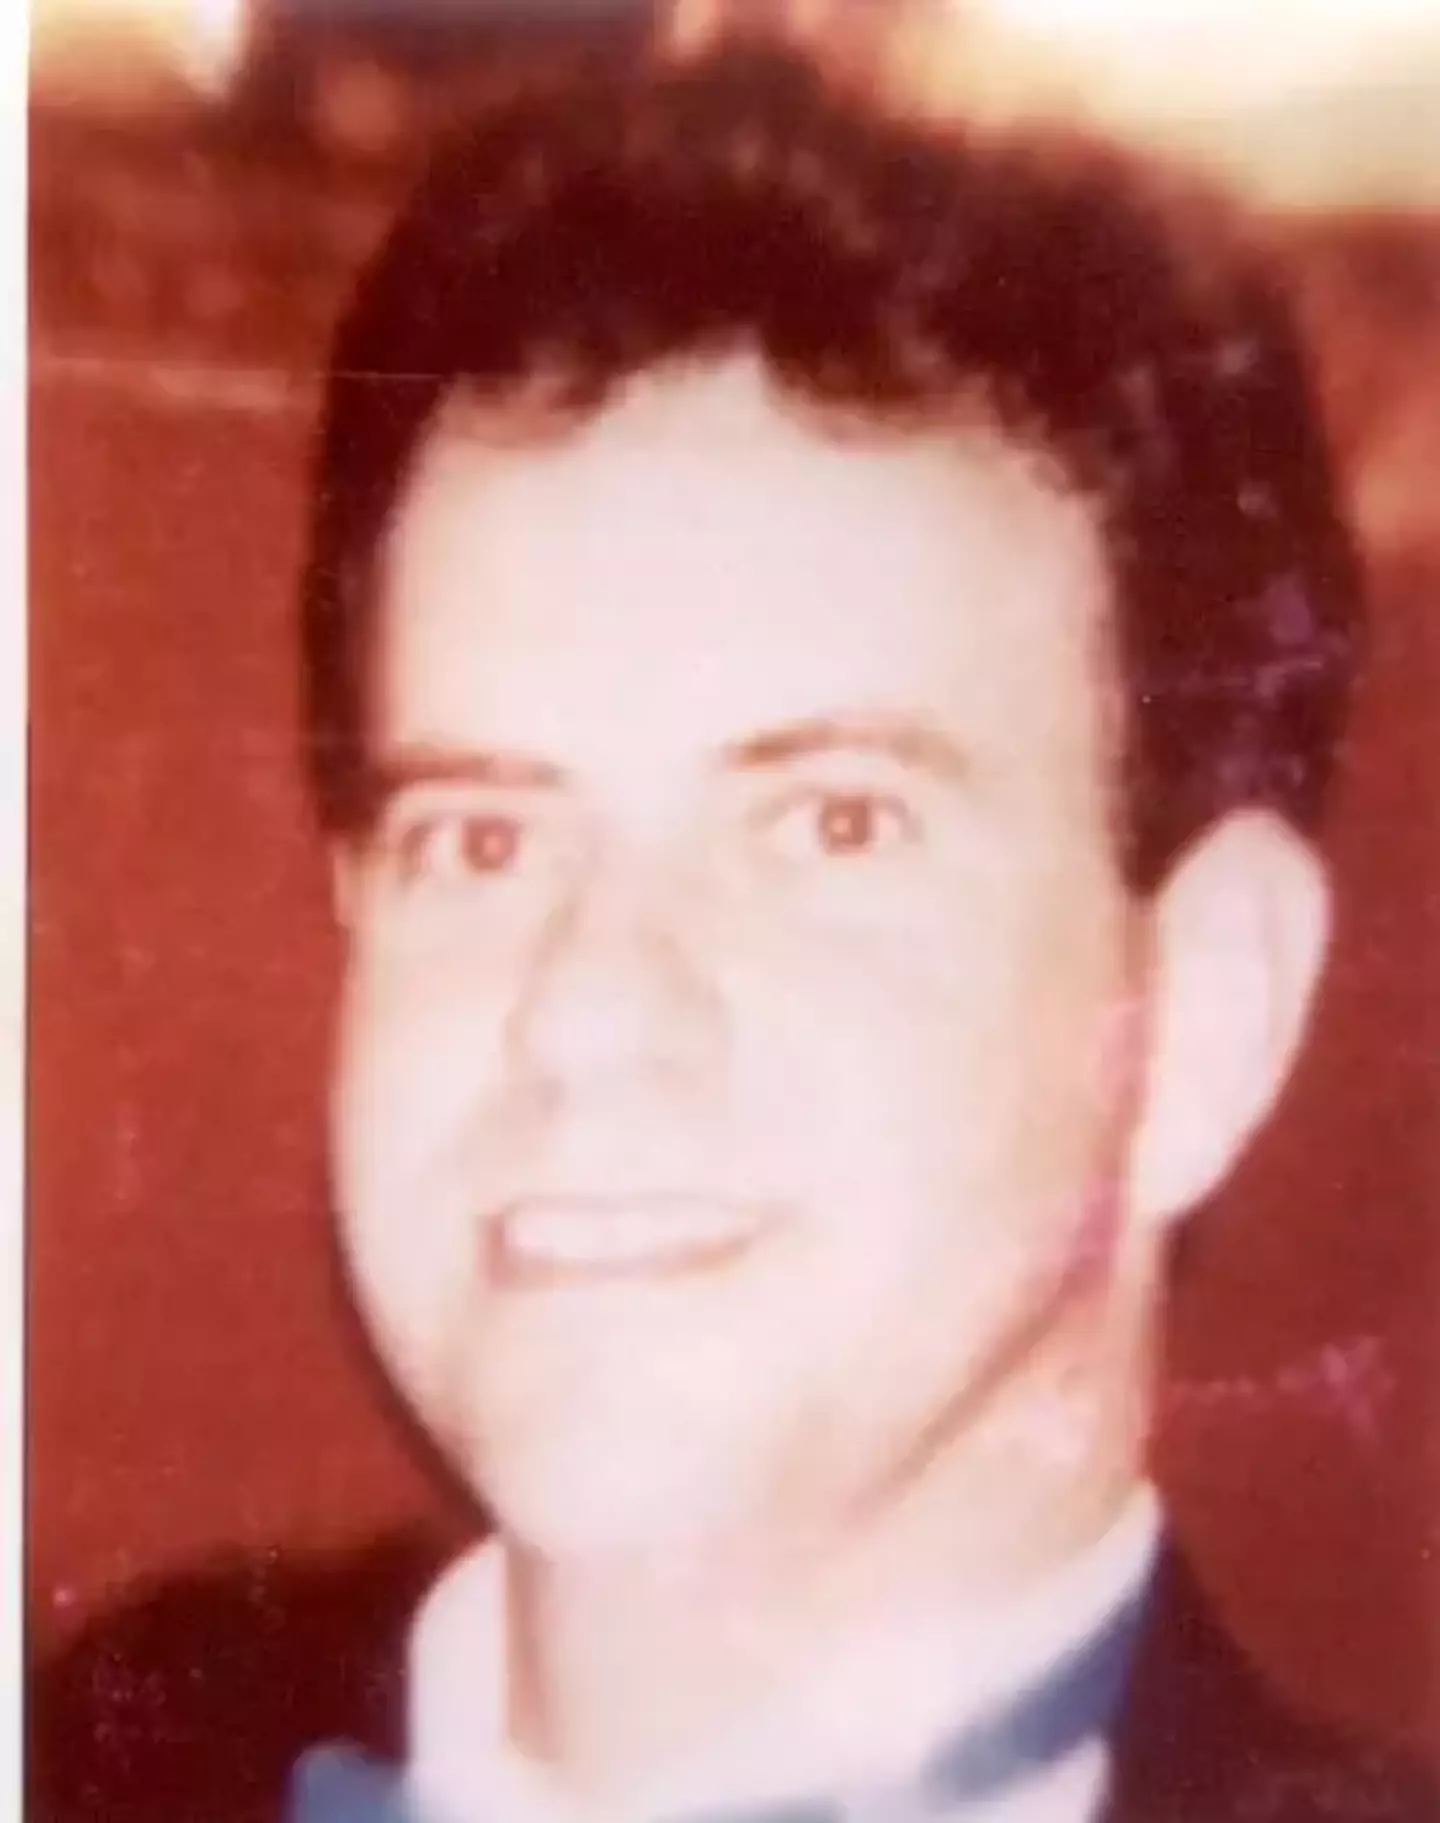 William Moldt went missing in 1997.